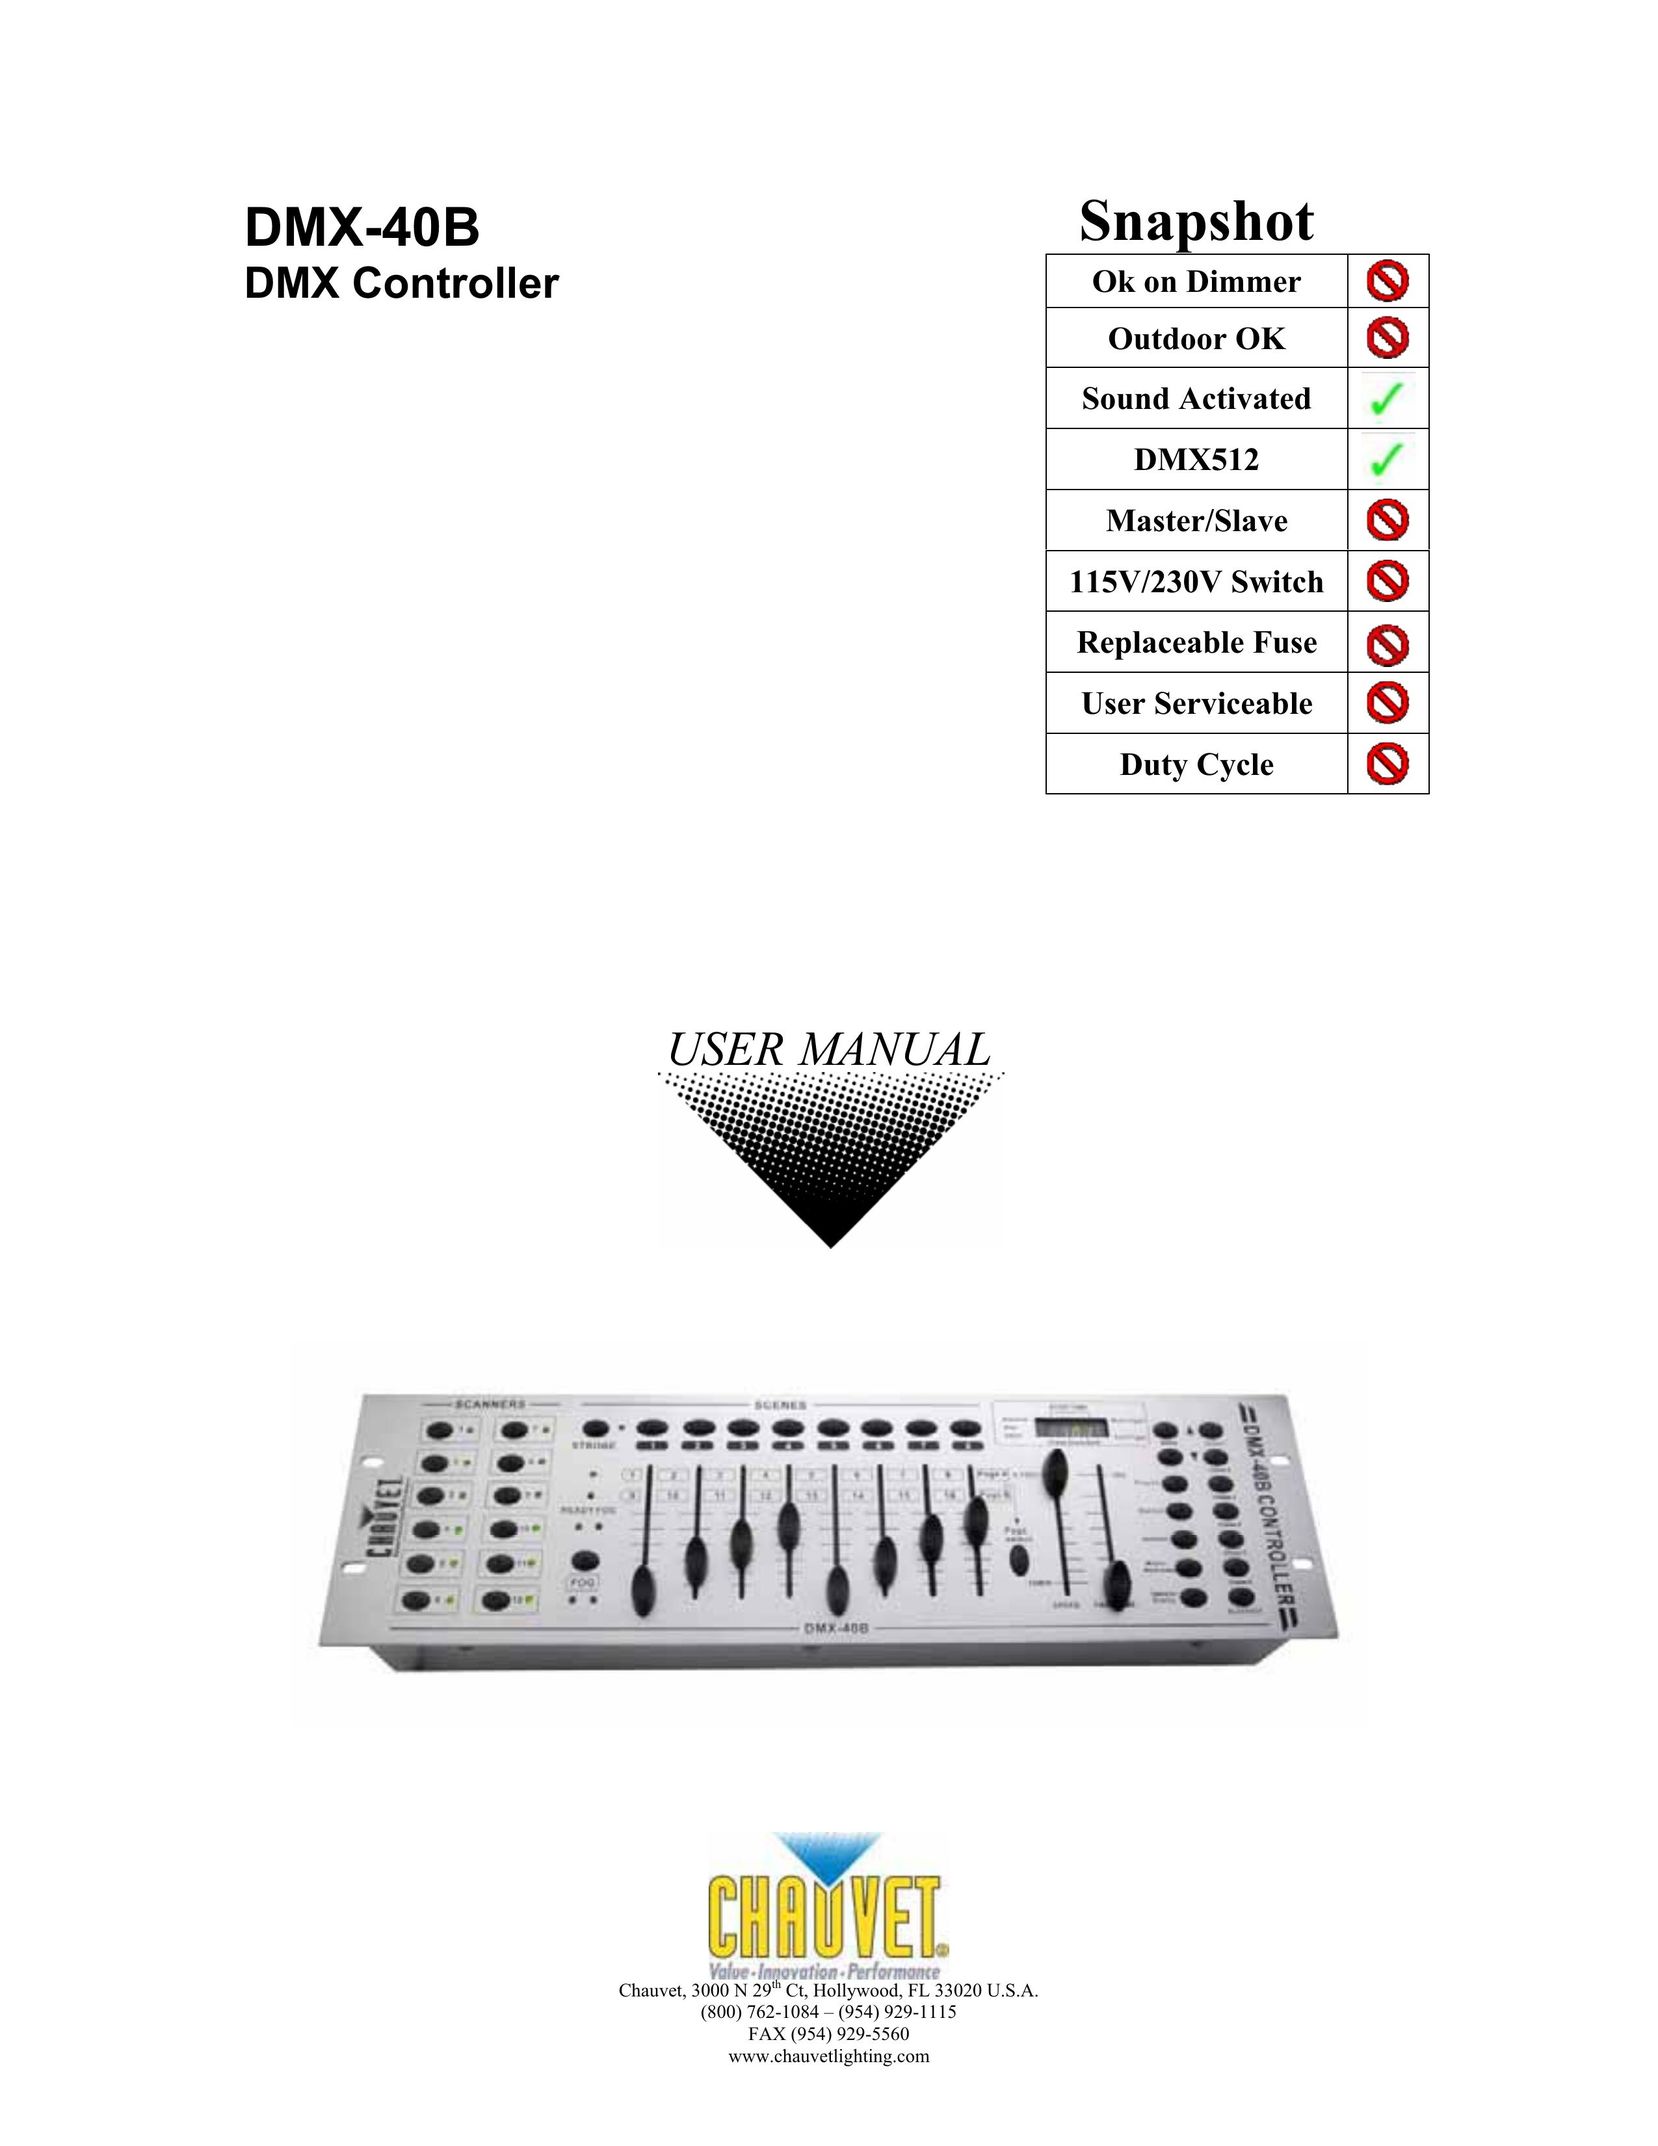 Chauvet DMX-40B Speaker System User Manual